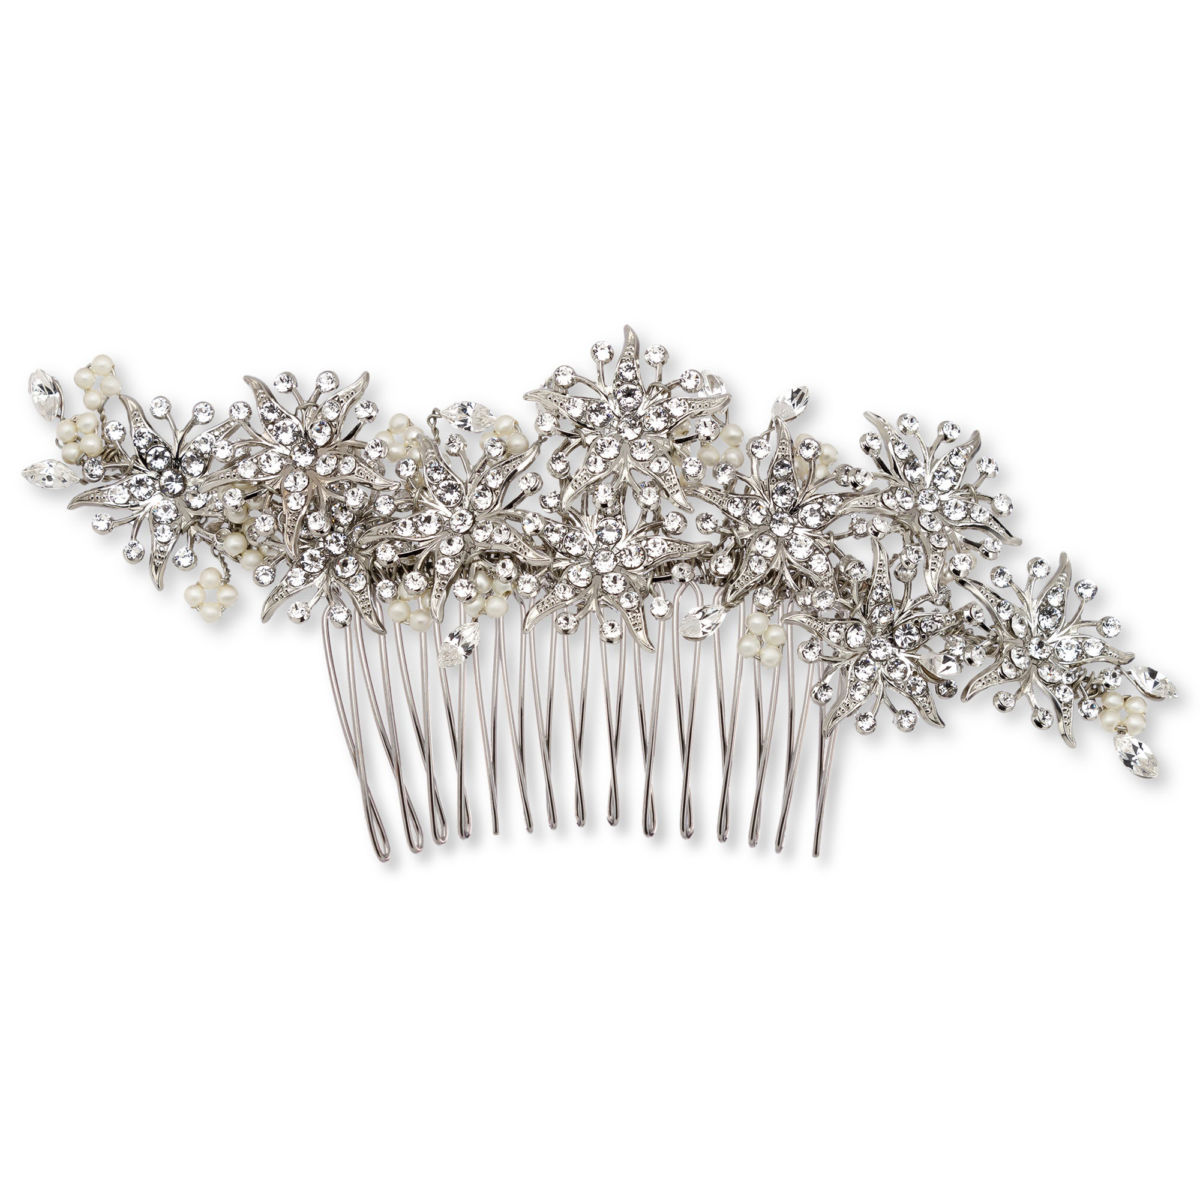 New York Hair Accessories - Ellen Hunter NYC - Luxury Bridal Jewelry Designer - Combs, Wreaths, Earrings, Headbands, Vines, Hairpins